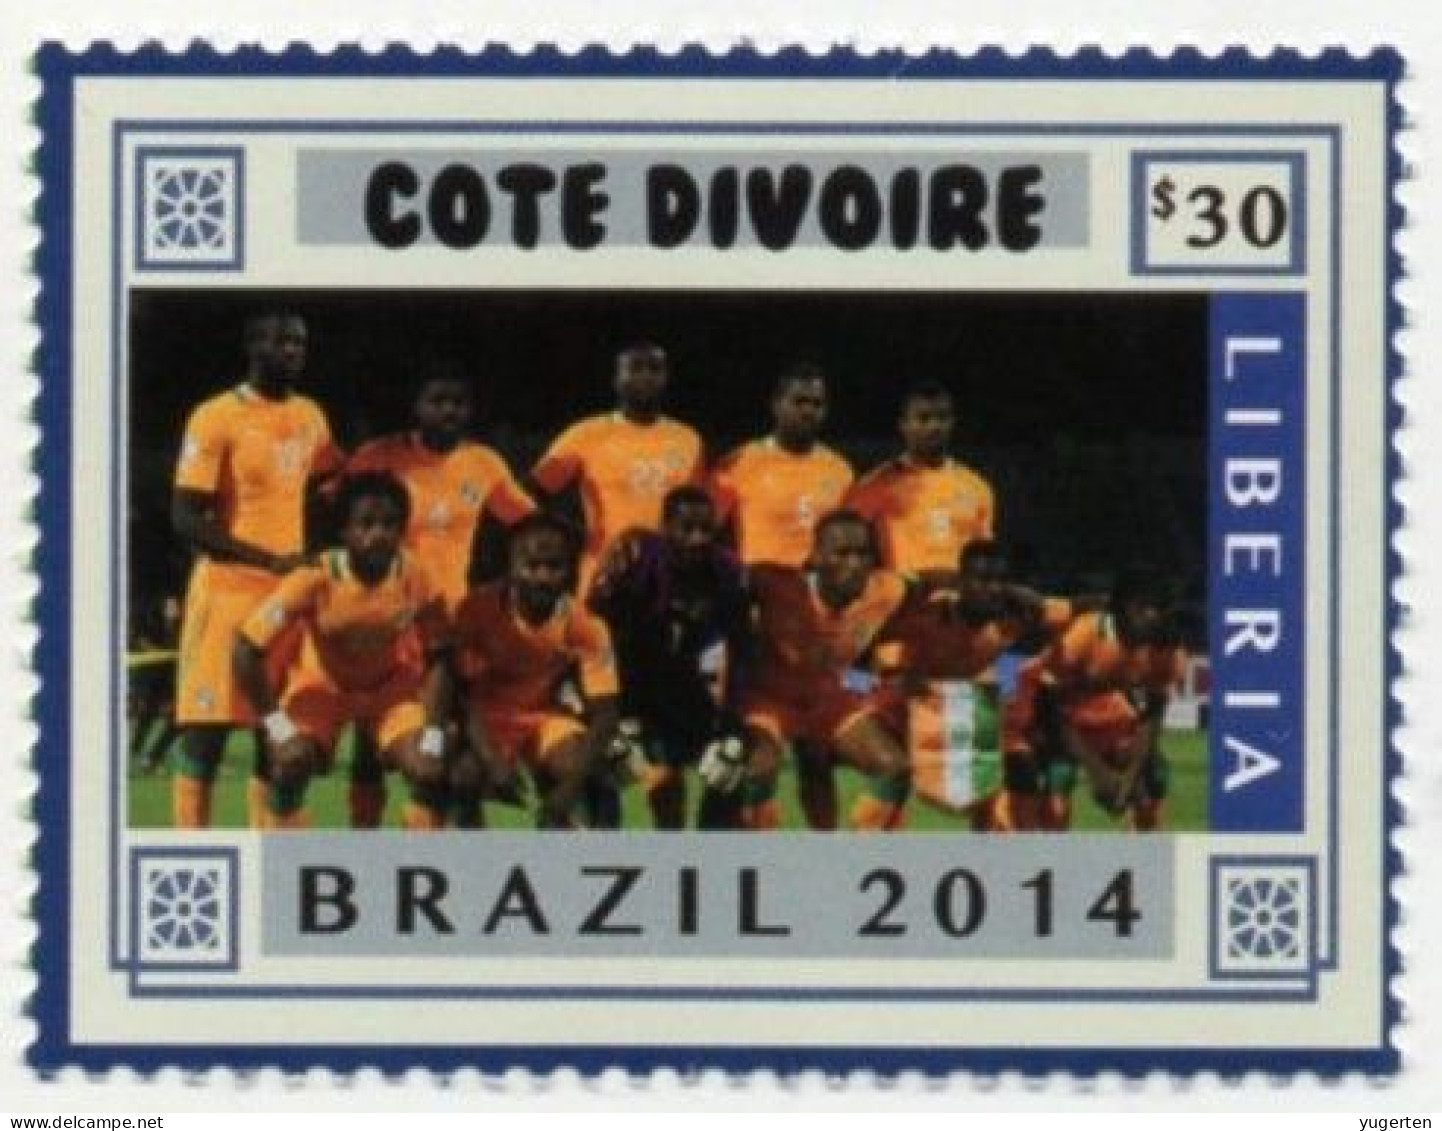 LIBERIA 2014 - 1v - MNH - Ivory Coast Team - Brazil World Football Championship - Soccer Calcio - Football - World Cup - 2014 – Brazil